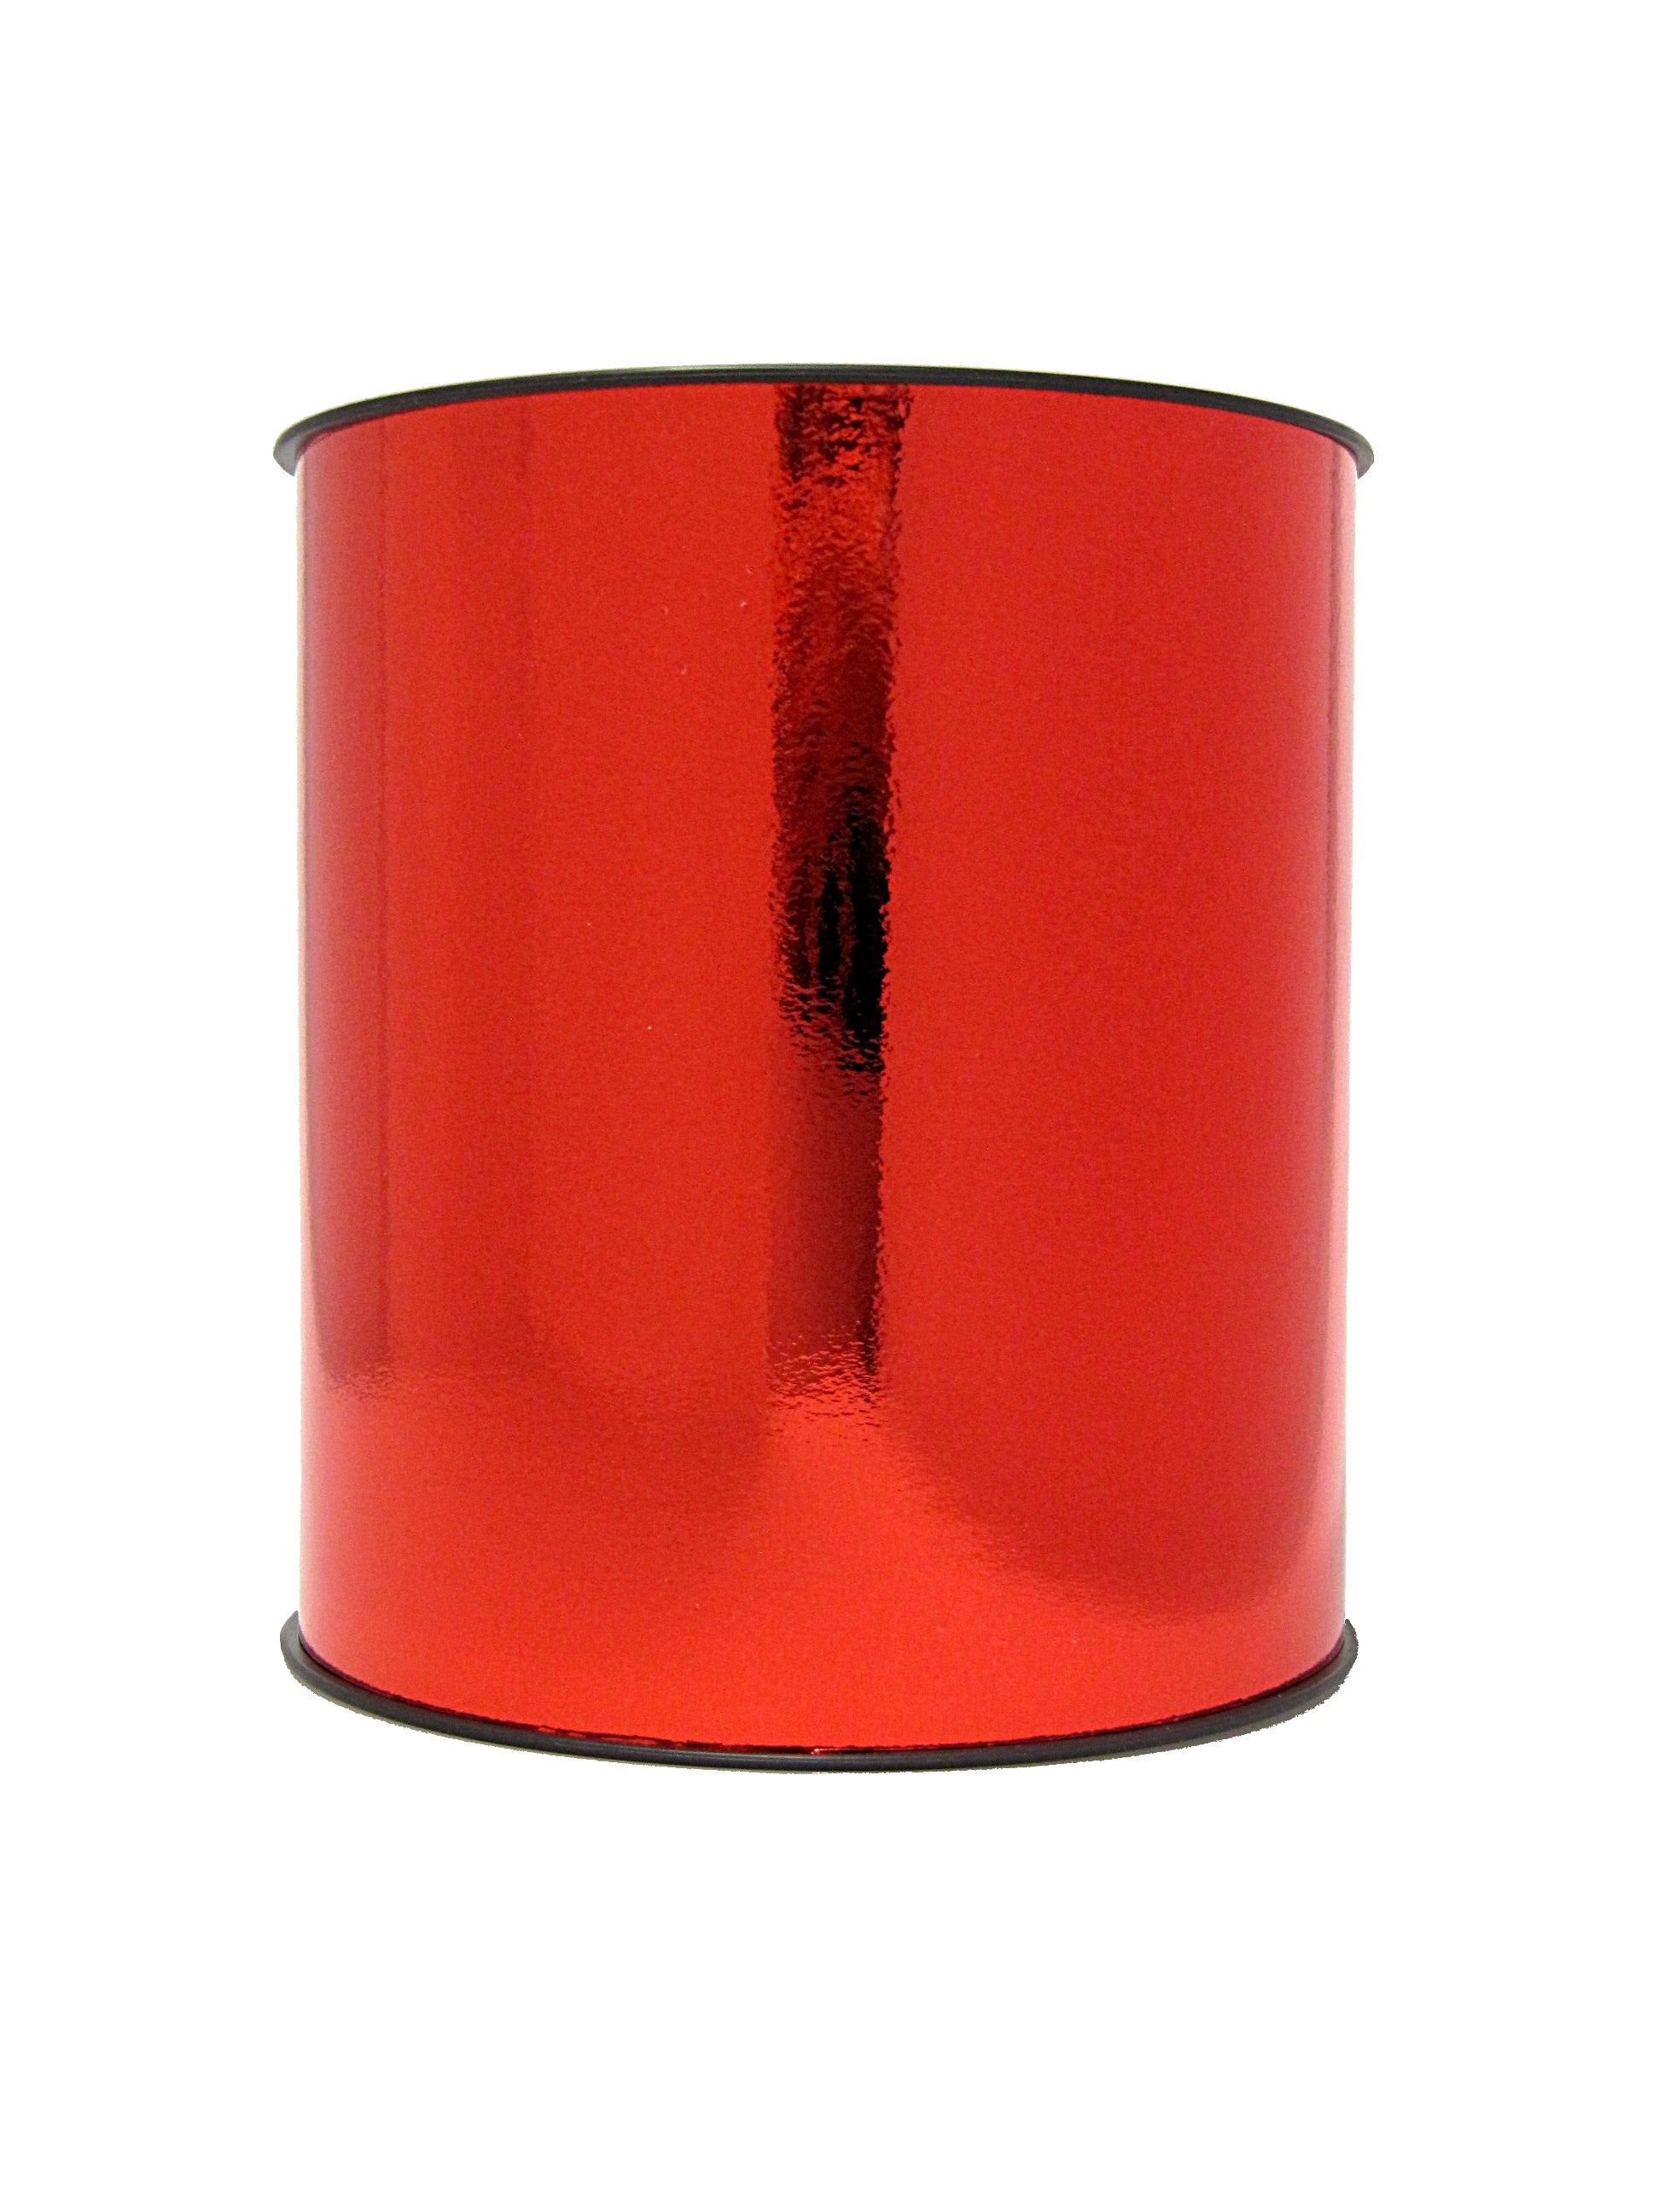 DittaDisplay bobine bolduc ruban fin miroir métal spule dünnes band spiegel metall reel thin ribbon mirror metal rouge rot red